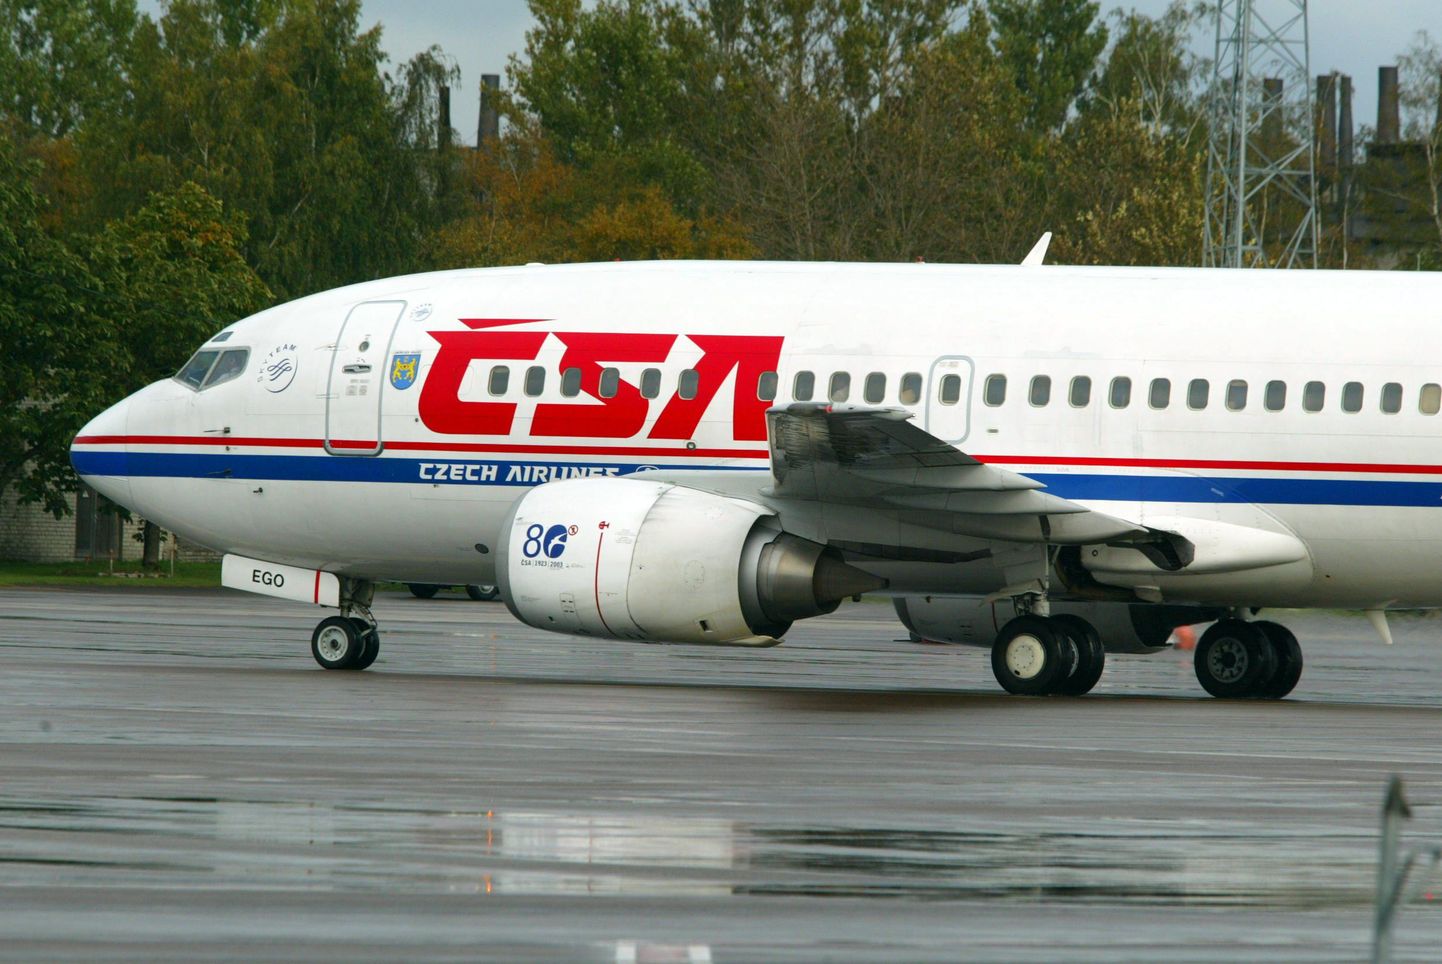 Czech Airlinesi lennuk saabumas Tallinna lennuväljale.